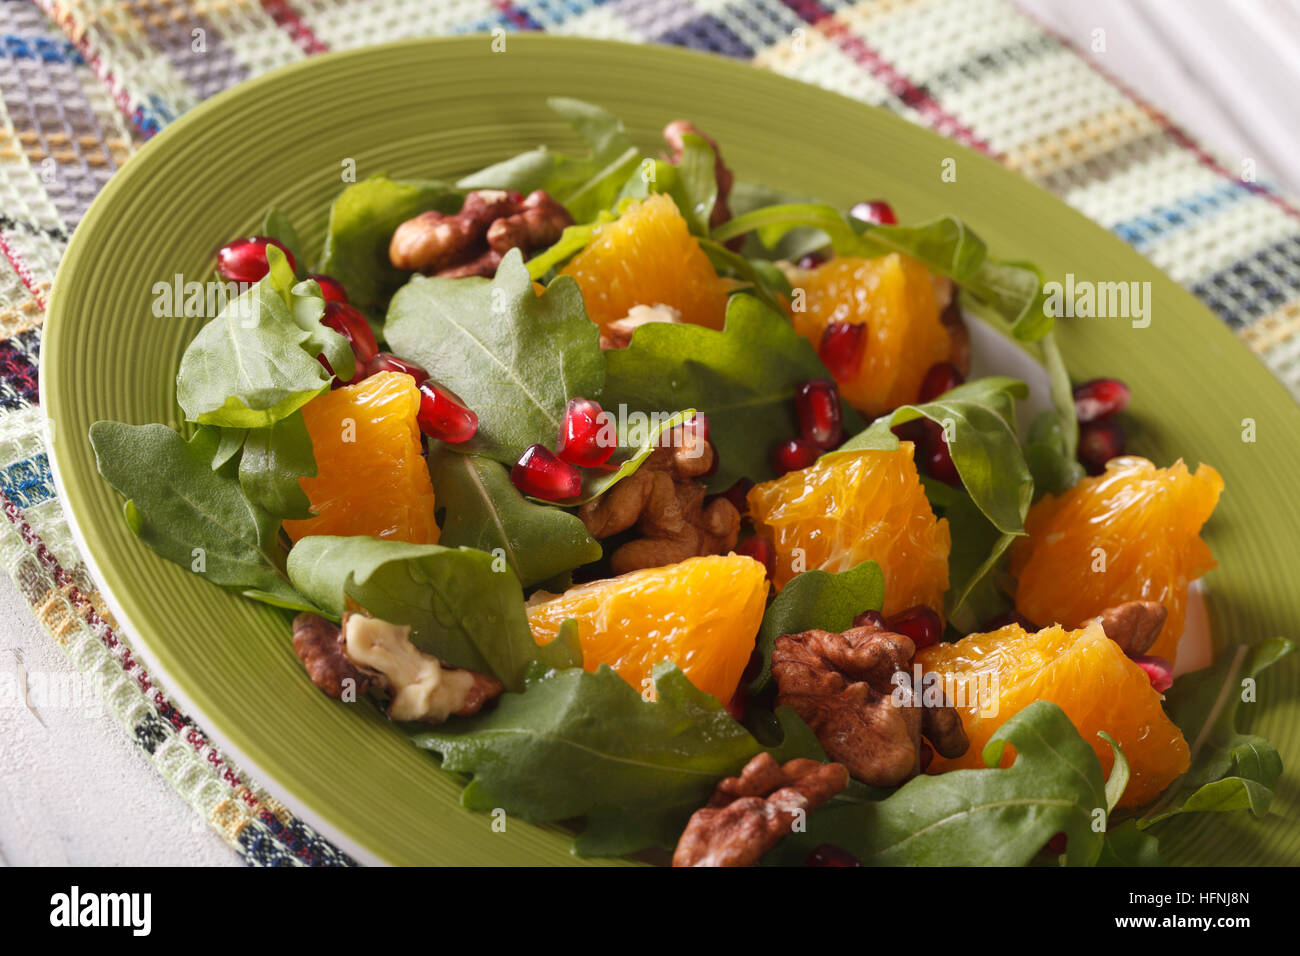 Dietary salad with pomegranate, orange and arugula close-up on a plate. horizontal Stock Photo